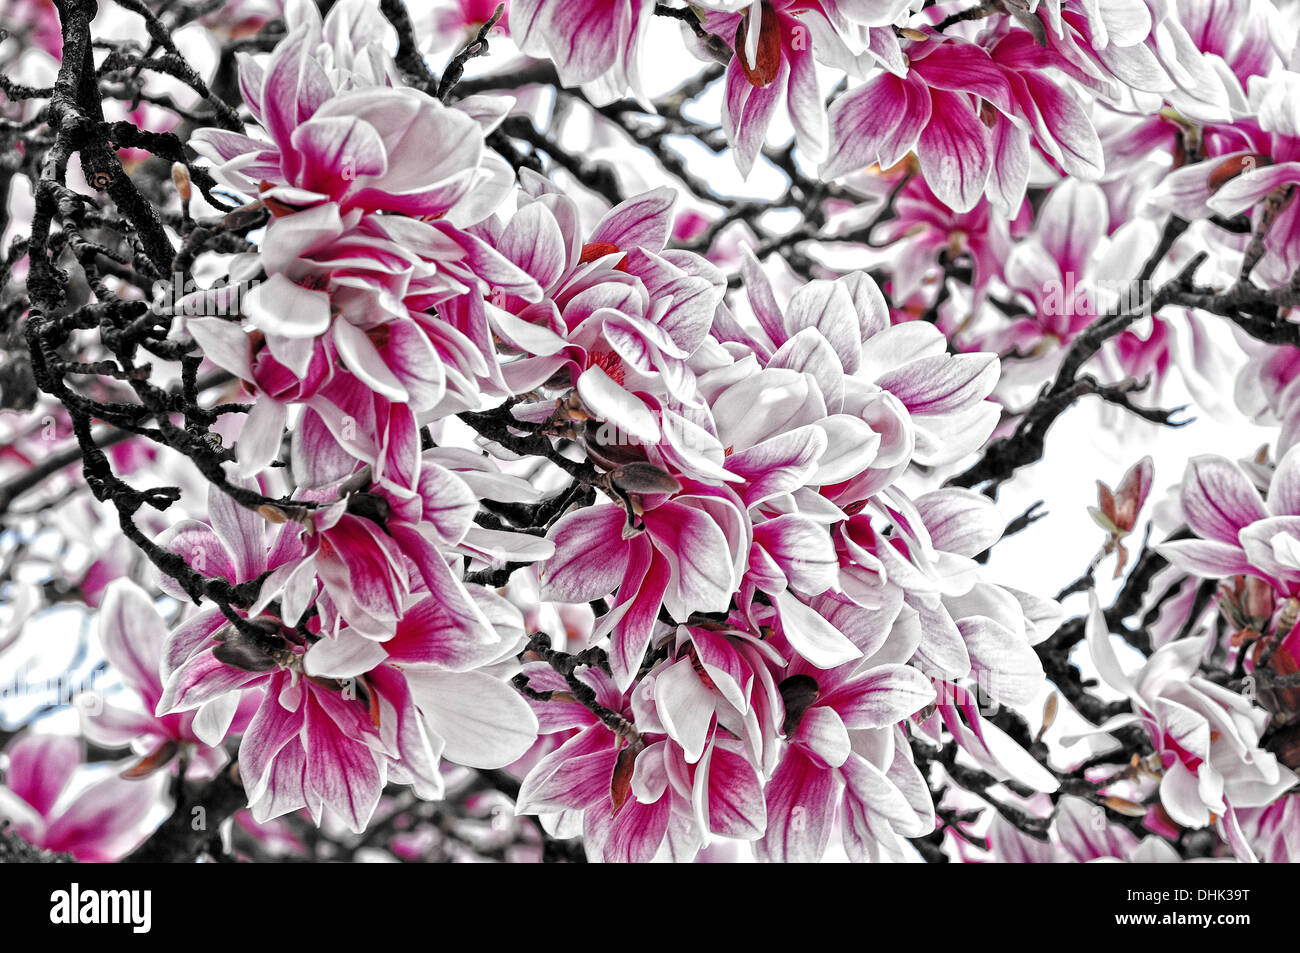 Flowers from Magnolia tree Stock Photo